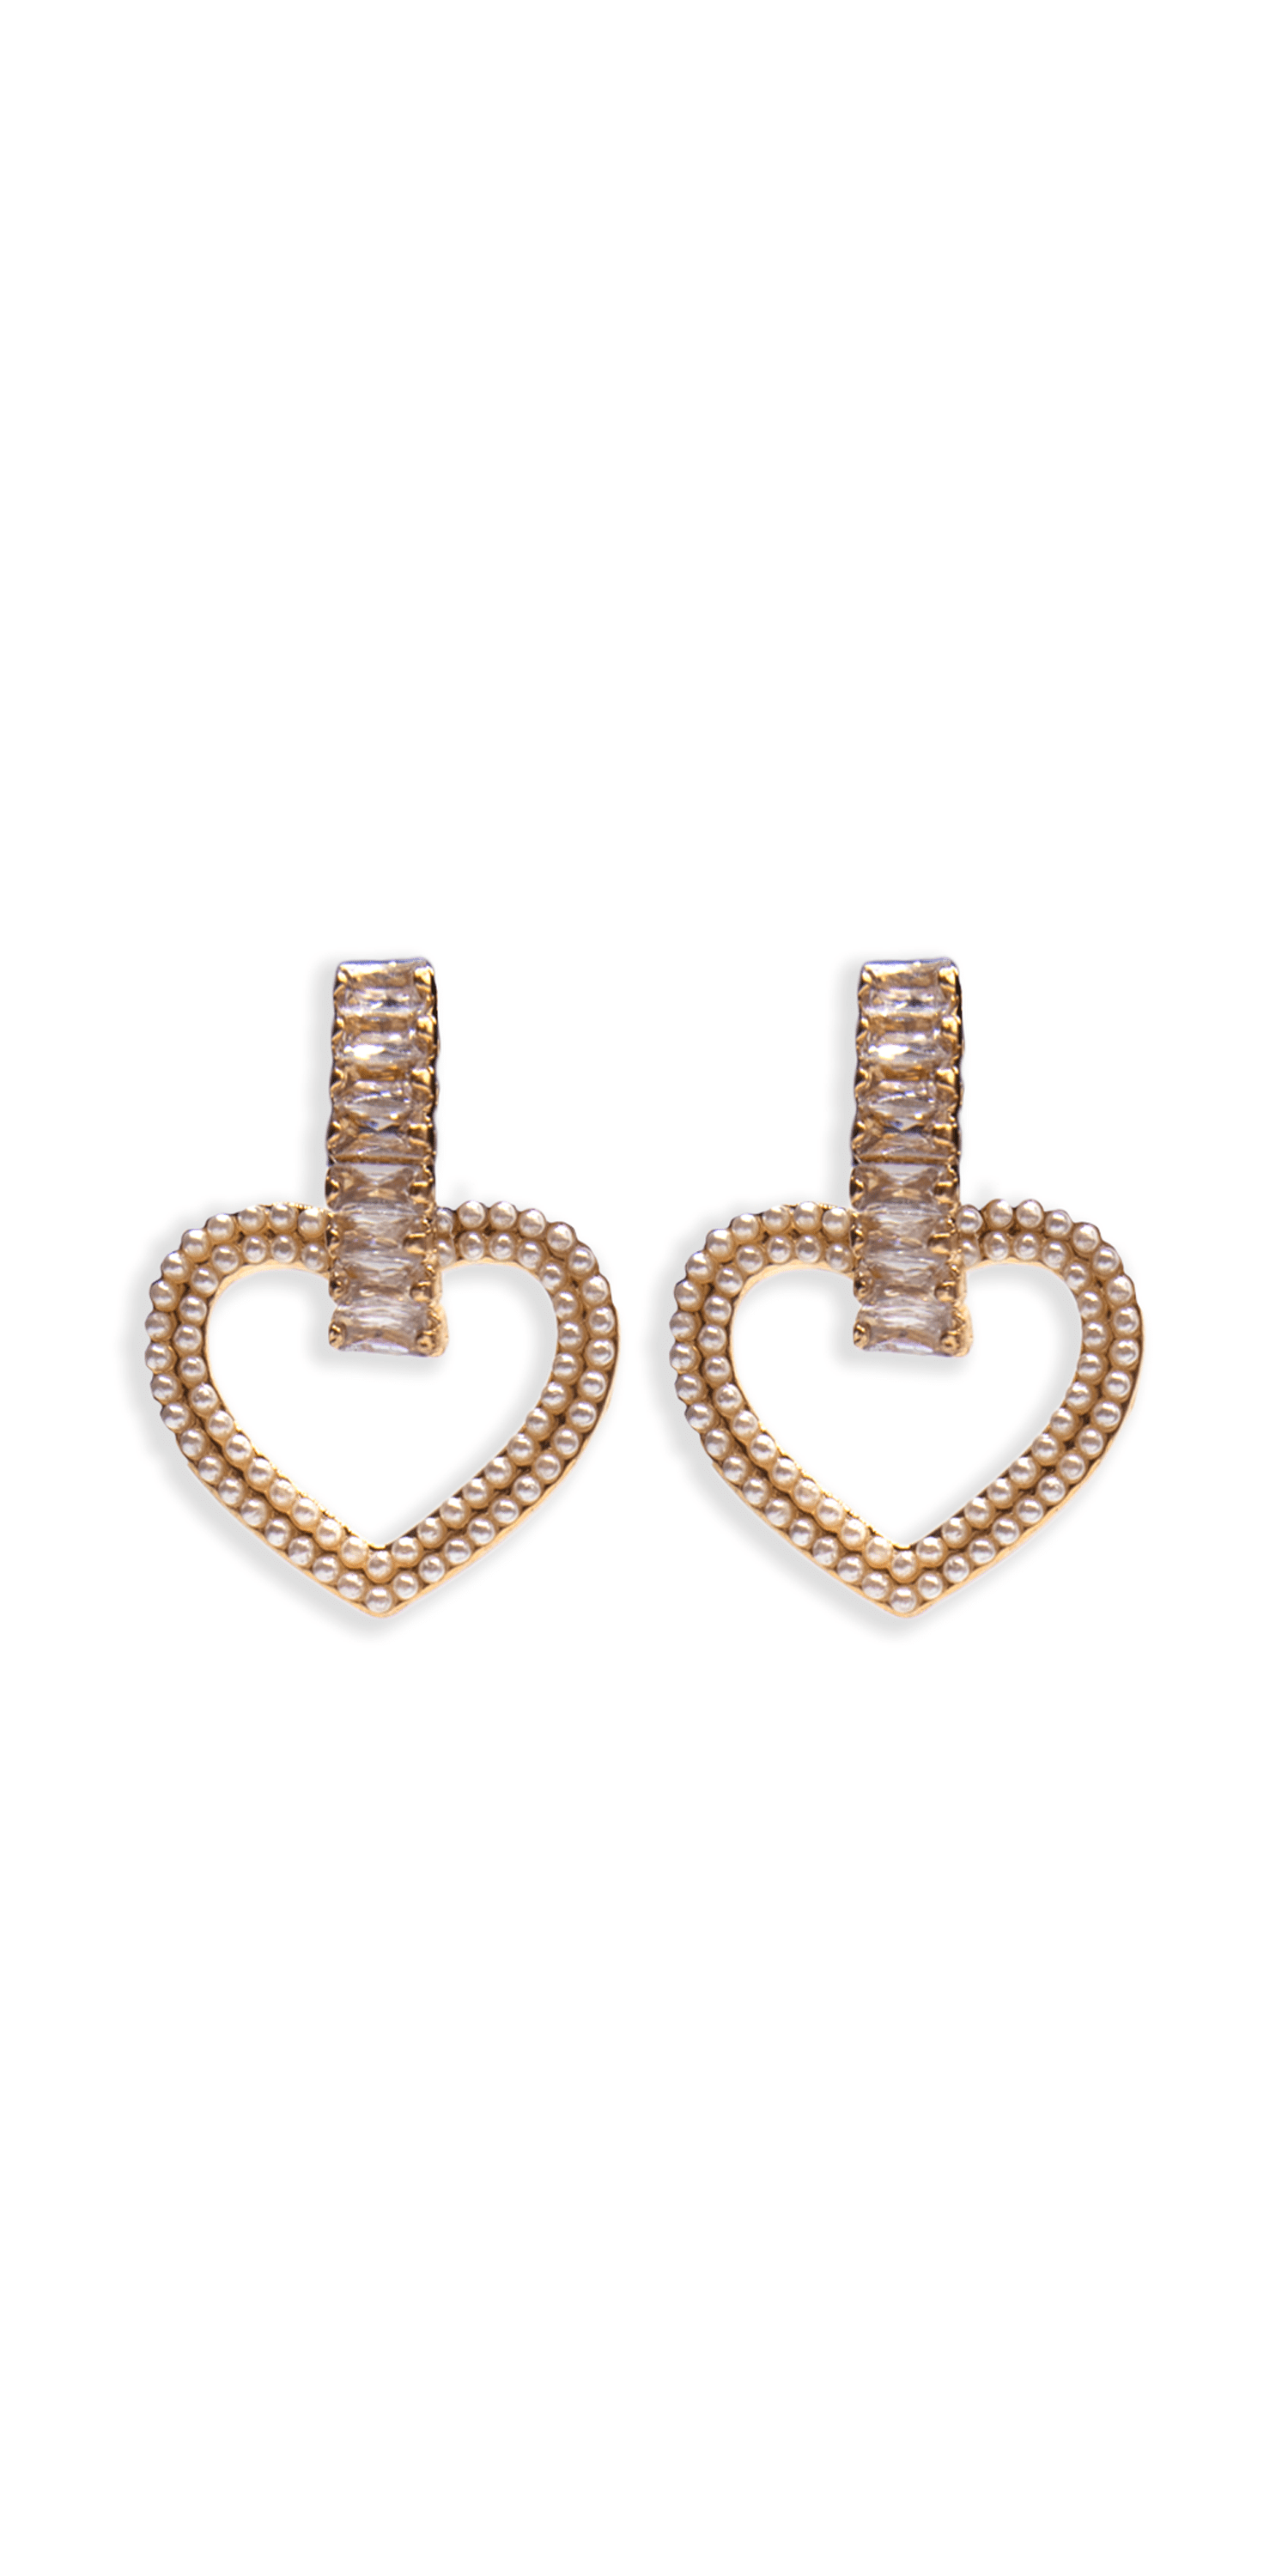 Pearl Heart Drop Earrings with Rhinestone Detail